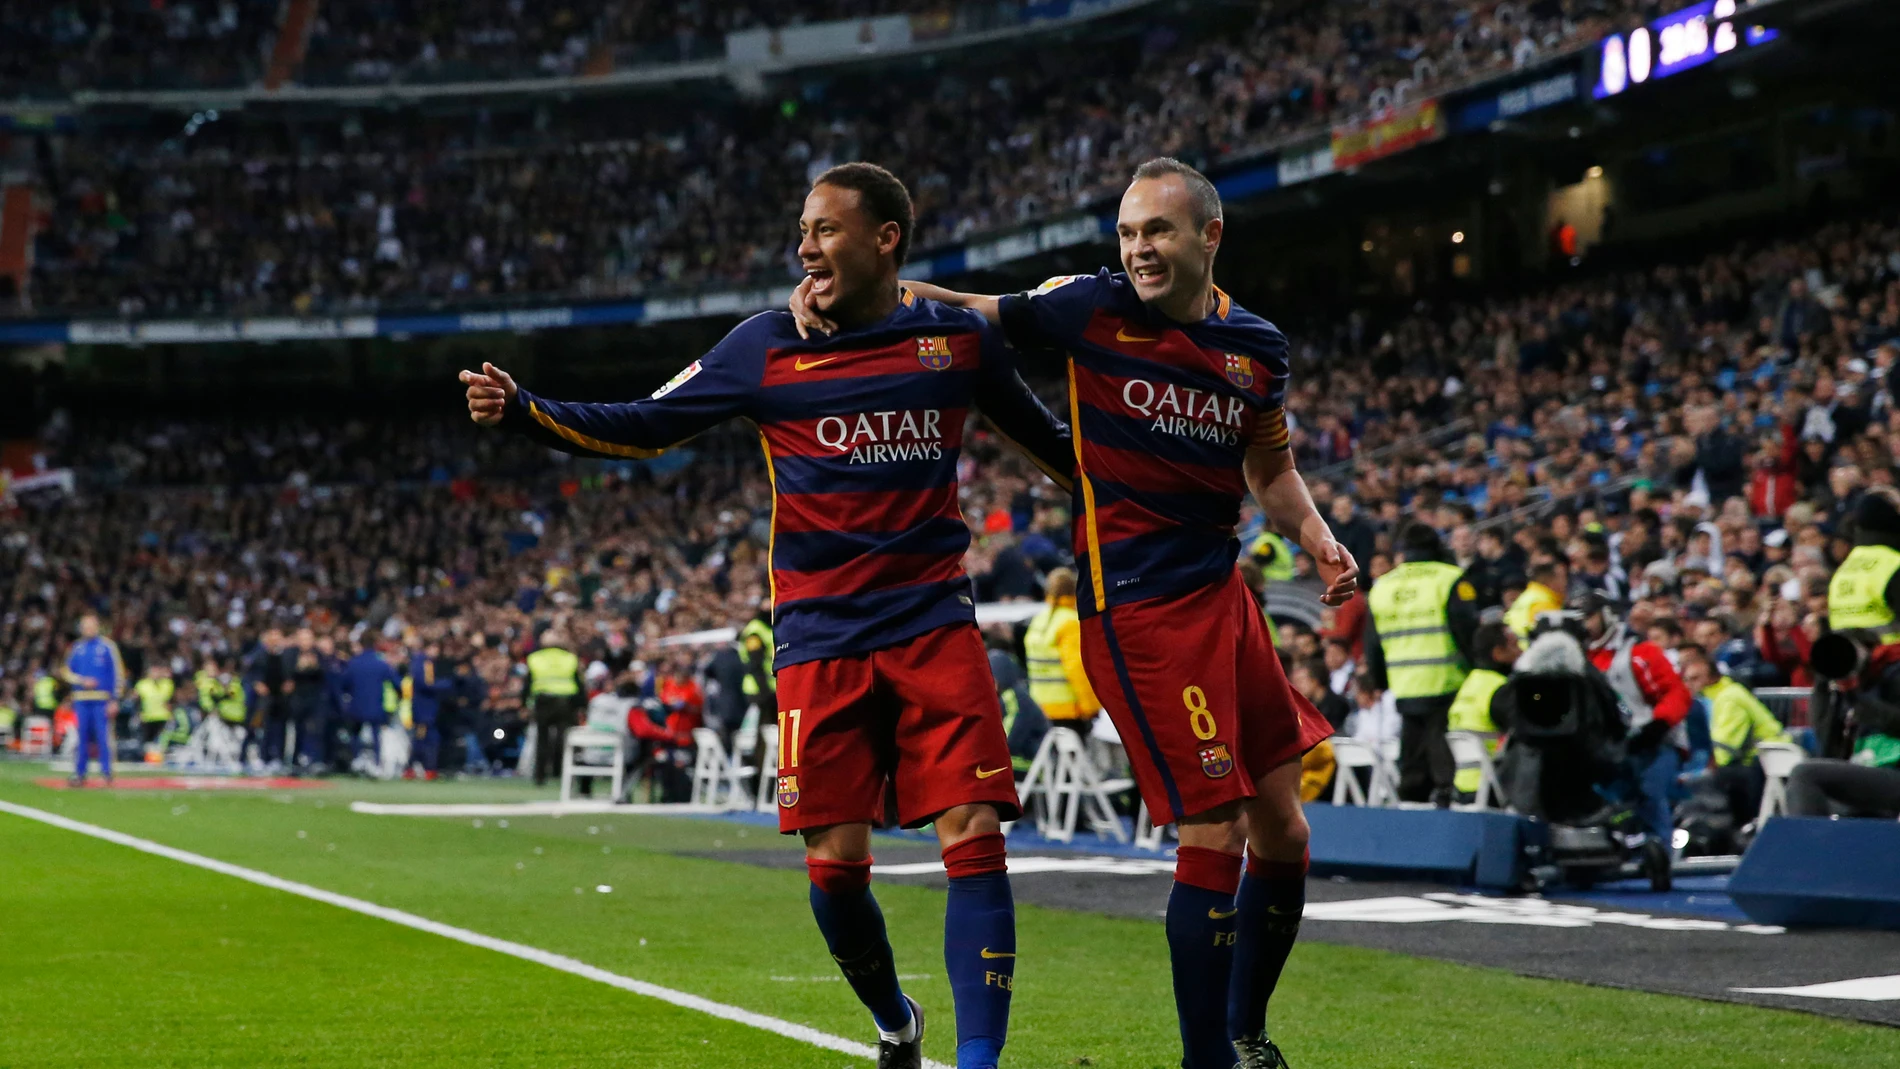 Iniesta celebra un gol junto a Neymar